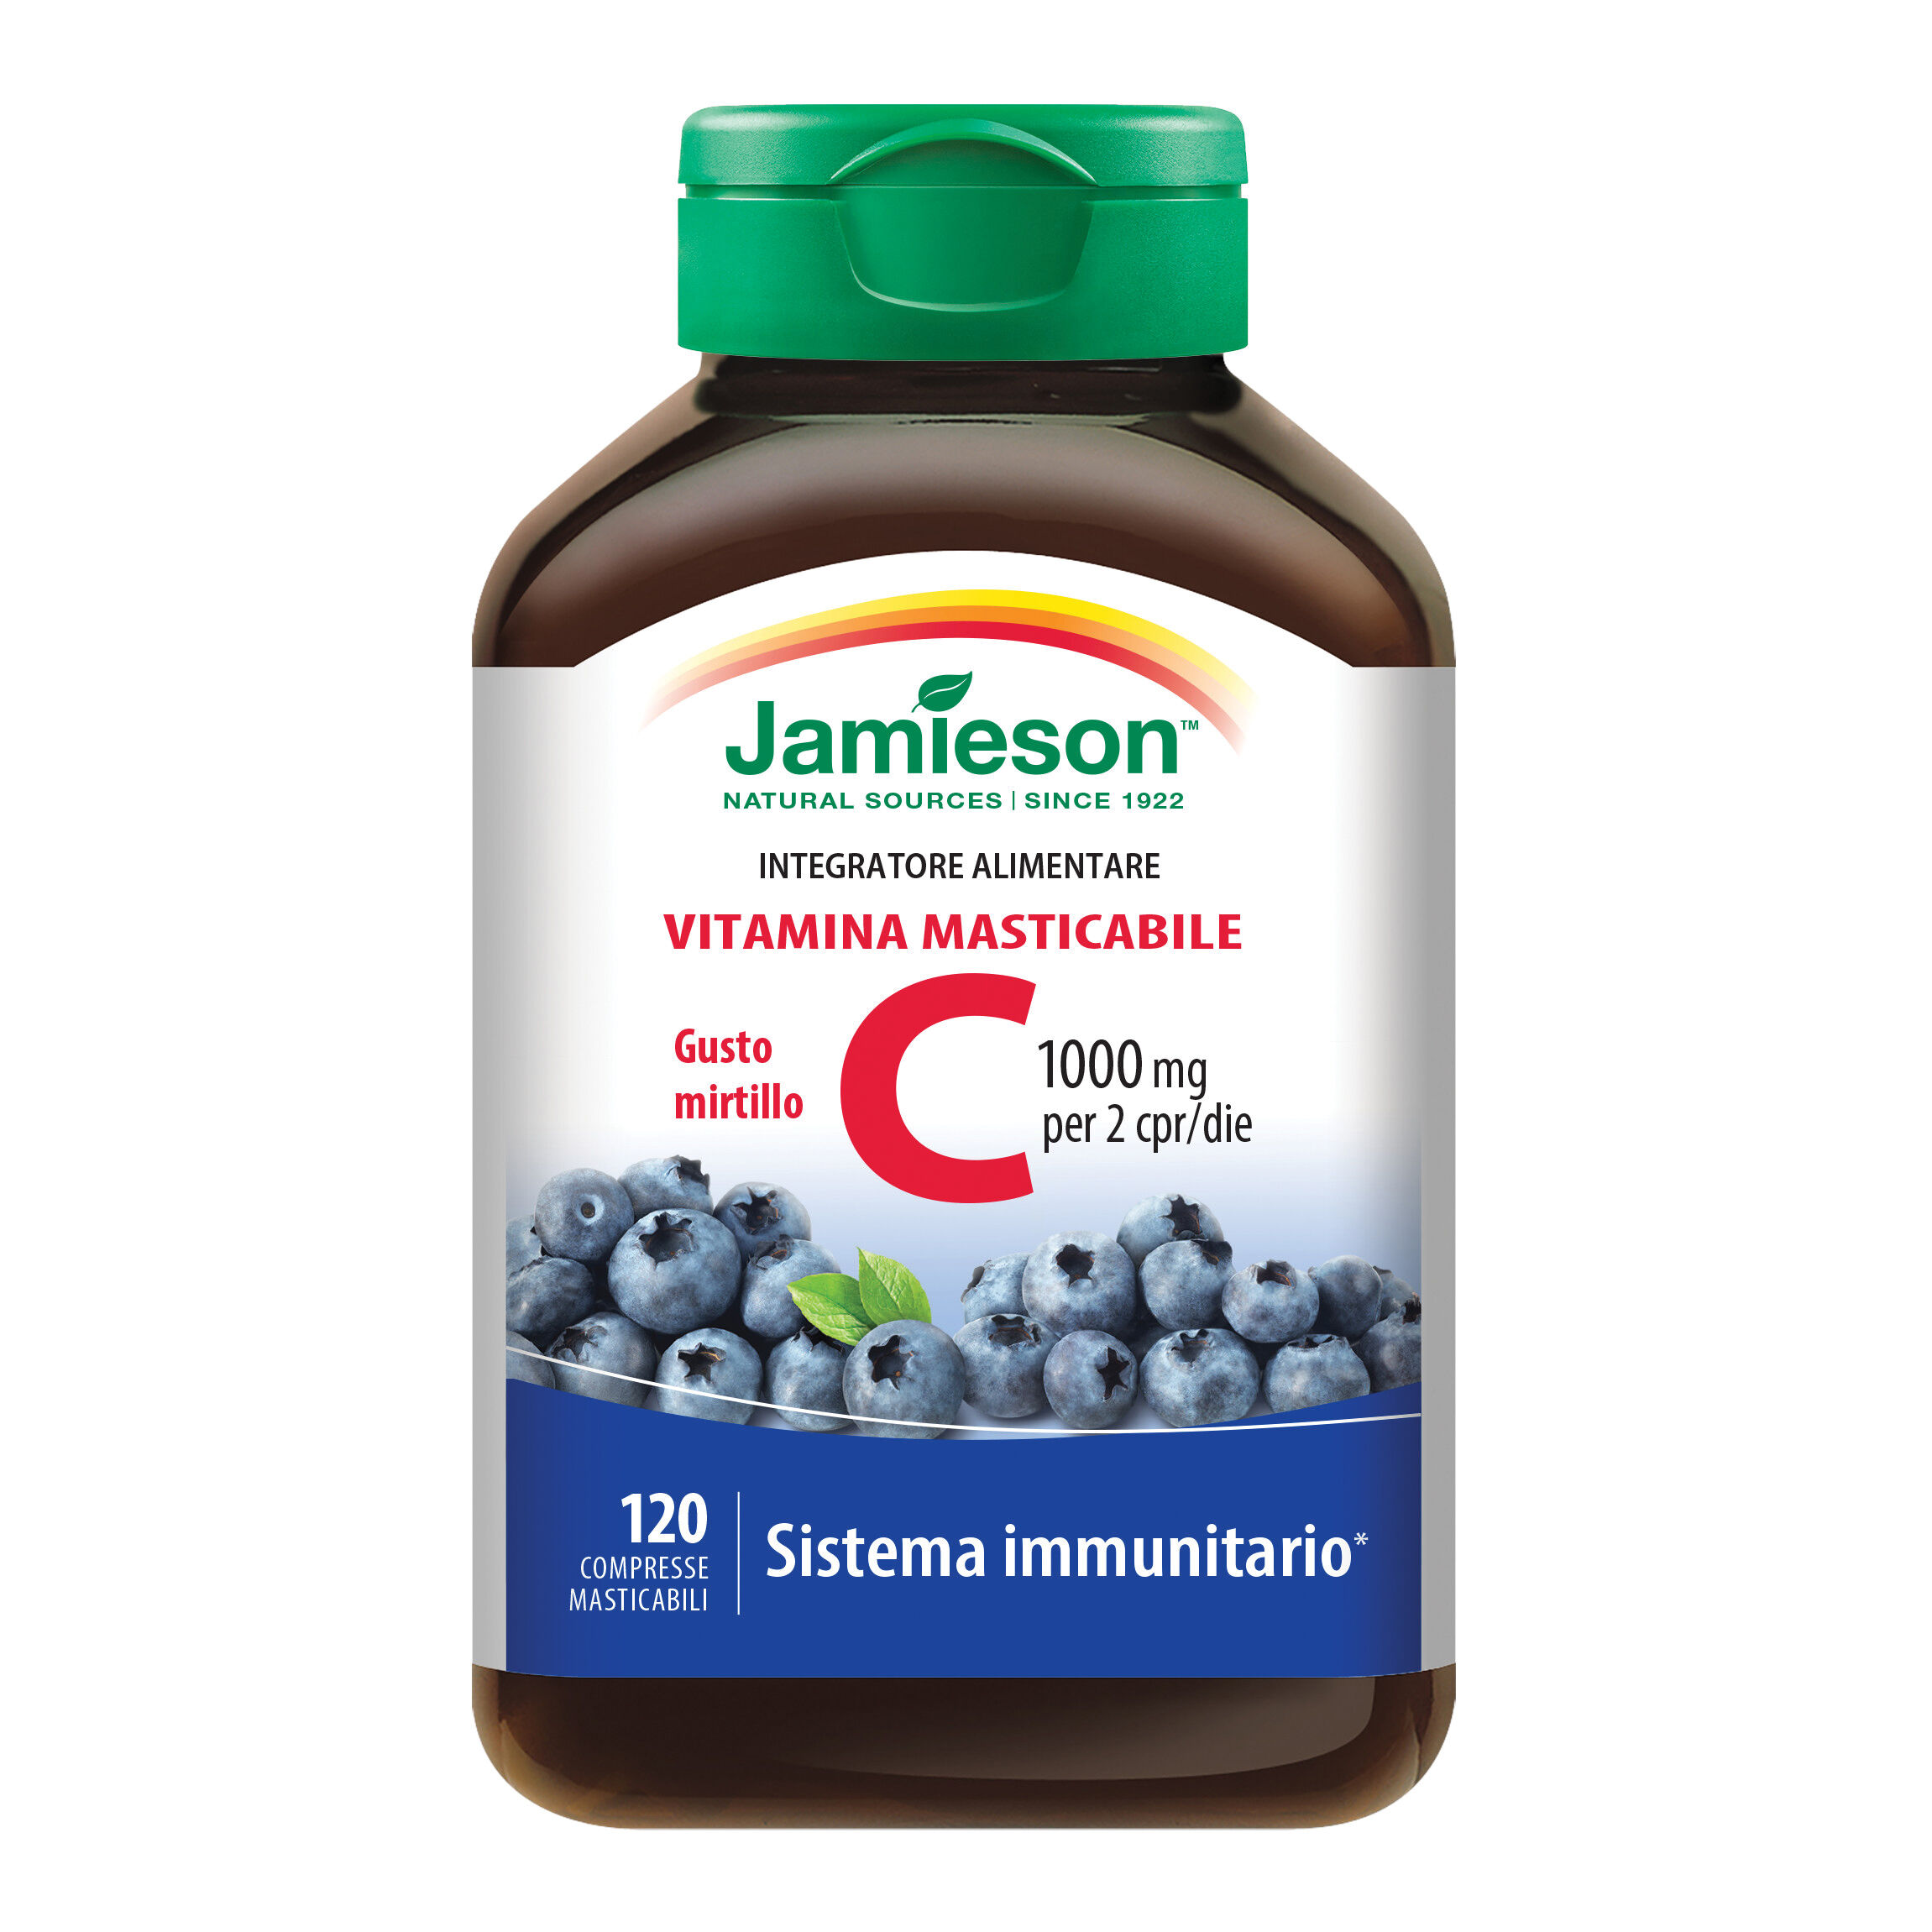 jamieson vitamina c 1000 mirtillo 120 compresse masticabili